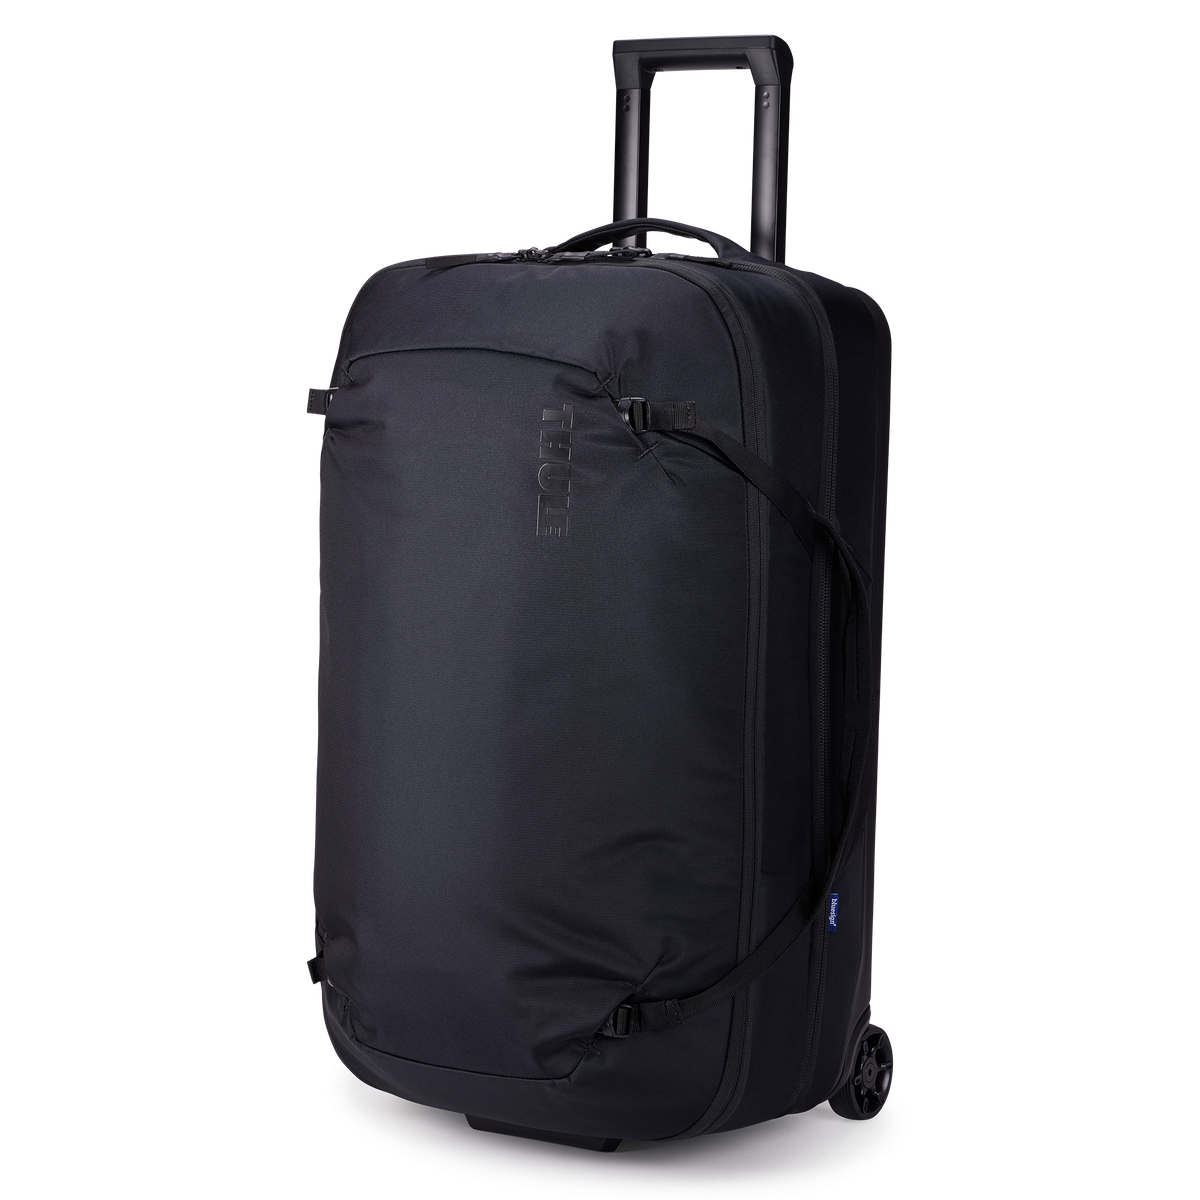 Thule Subterra 2 check-in suitcase wheeled duffel 70cm black